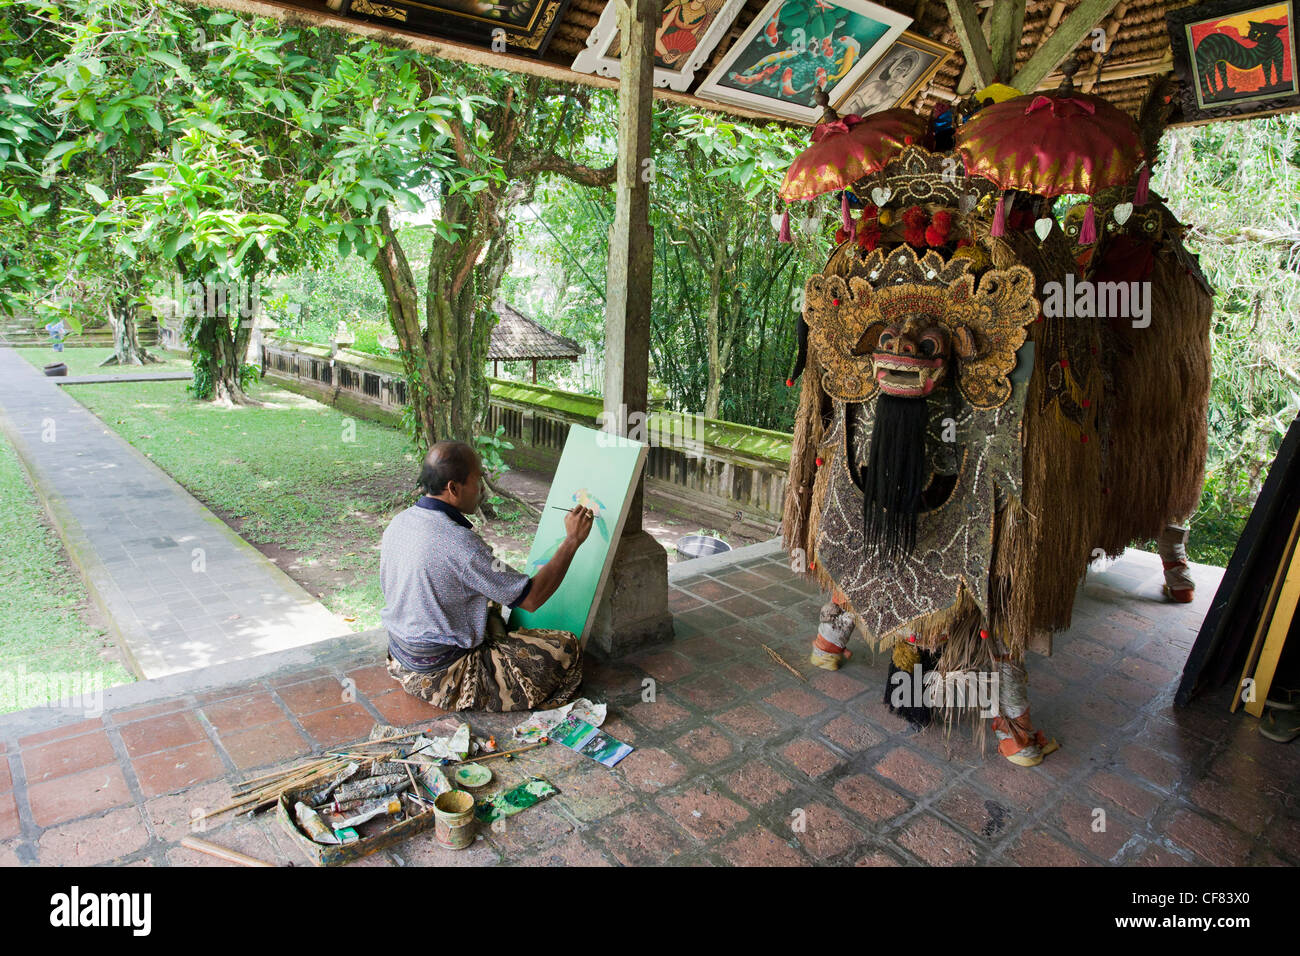 Indonesia, Asia, Bali island, Mengwi, Pura Taman Ayun, Temple, Artist, atelier, artist, painting, garden, studio, working Stock Photo